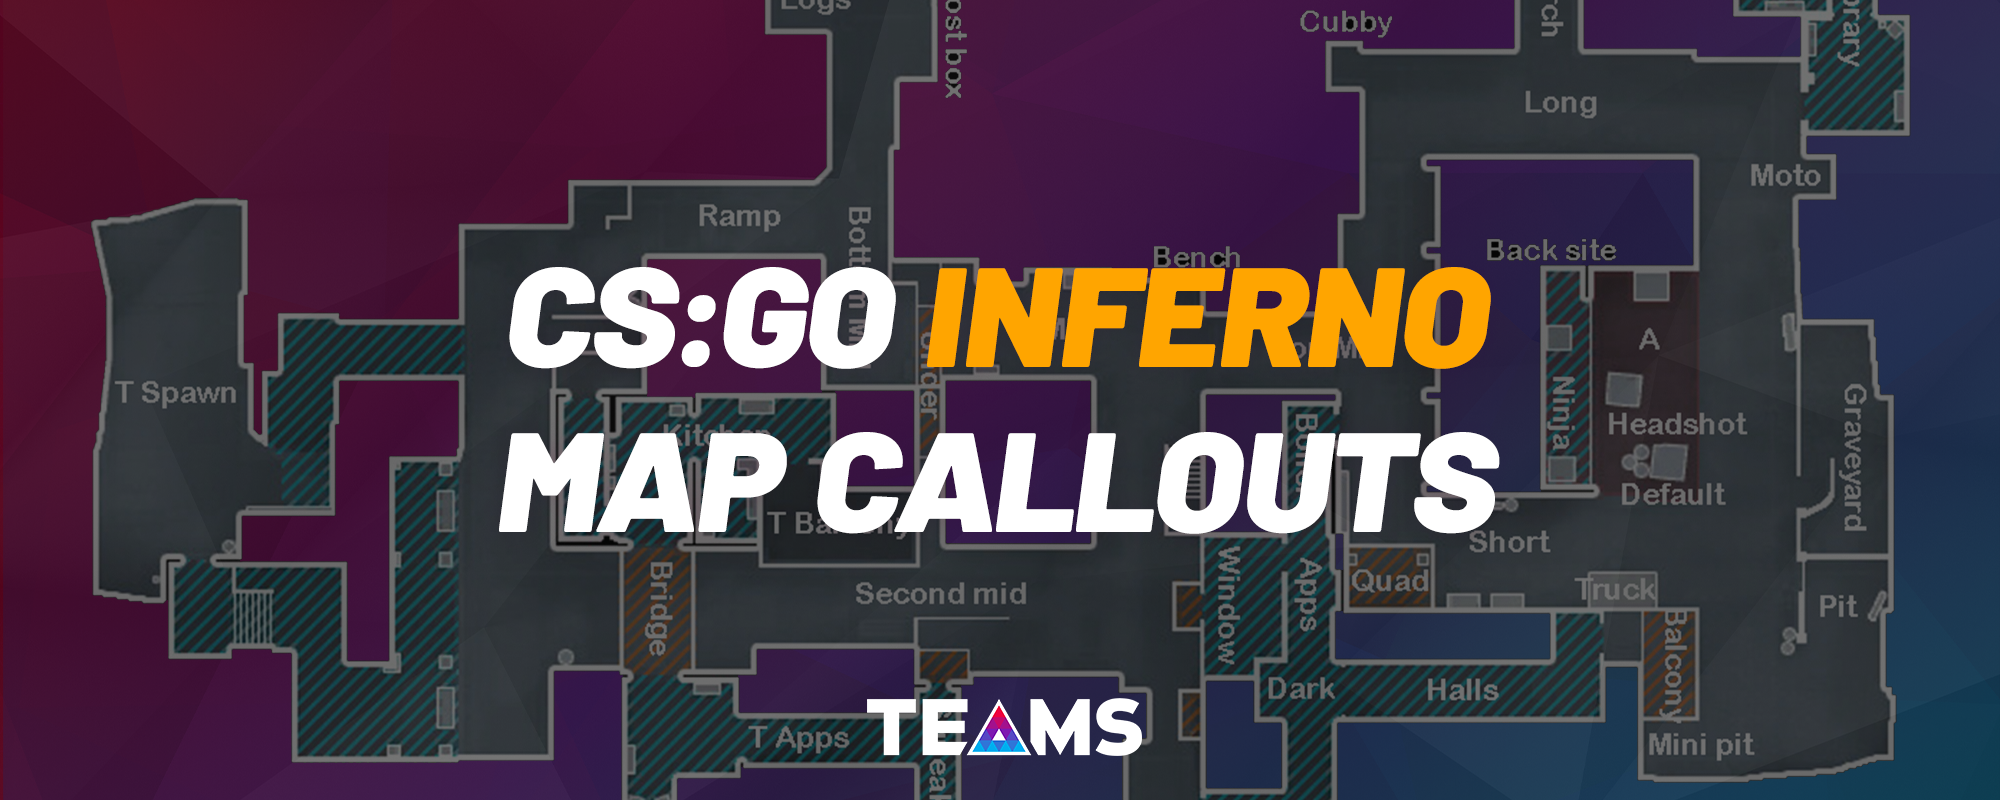 Inferno Callouts for CS:GO